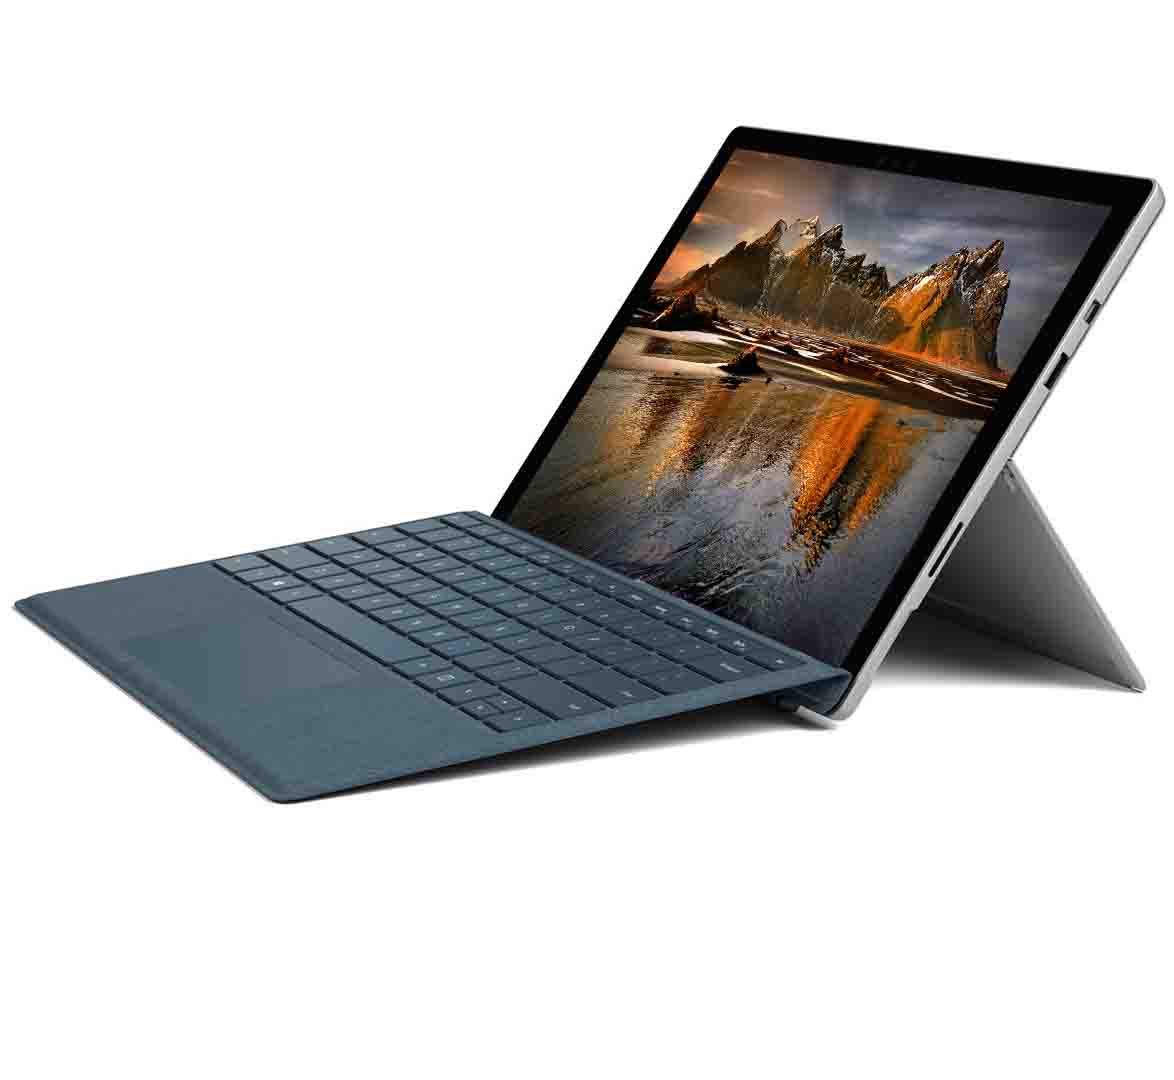 Microsoft Surface 1796 Business Laptop, Intel Core i5-1st Gen. CPU, 4GB RAM, 128GB SSD, 12.3 Inch Touchscreen, Windows 10 Pro, Refurbished Laptop